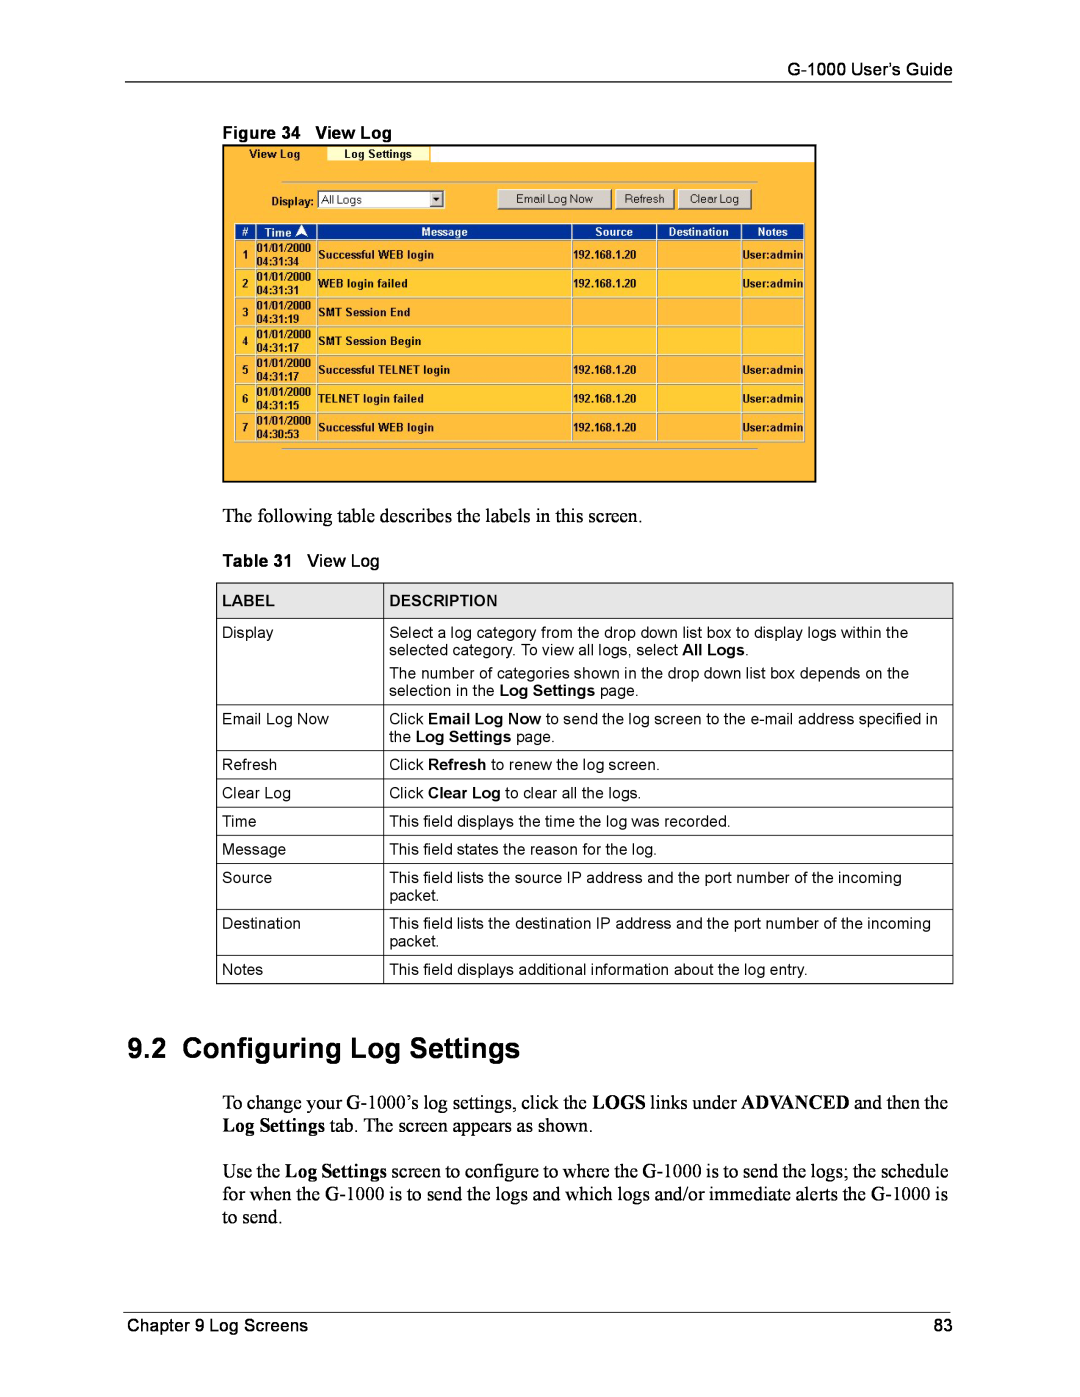 ZyXEL Communications G-1000 manual Configuring Log Settings, View Log 